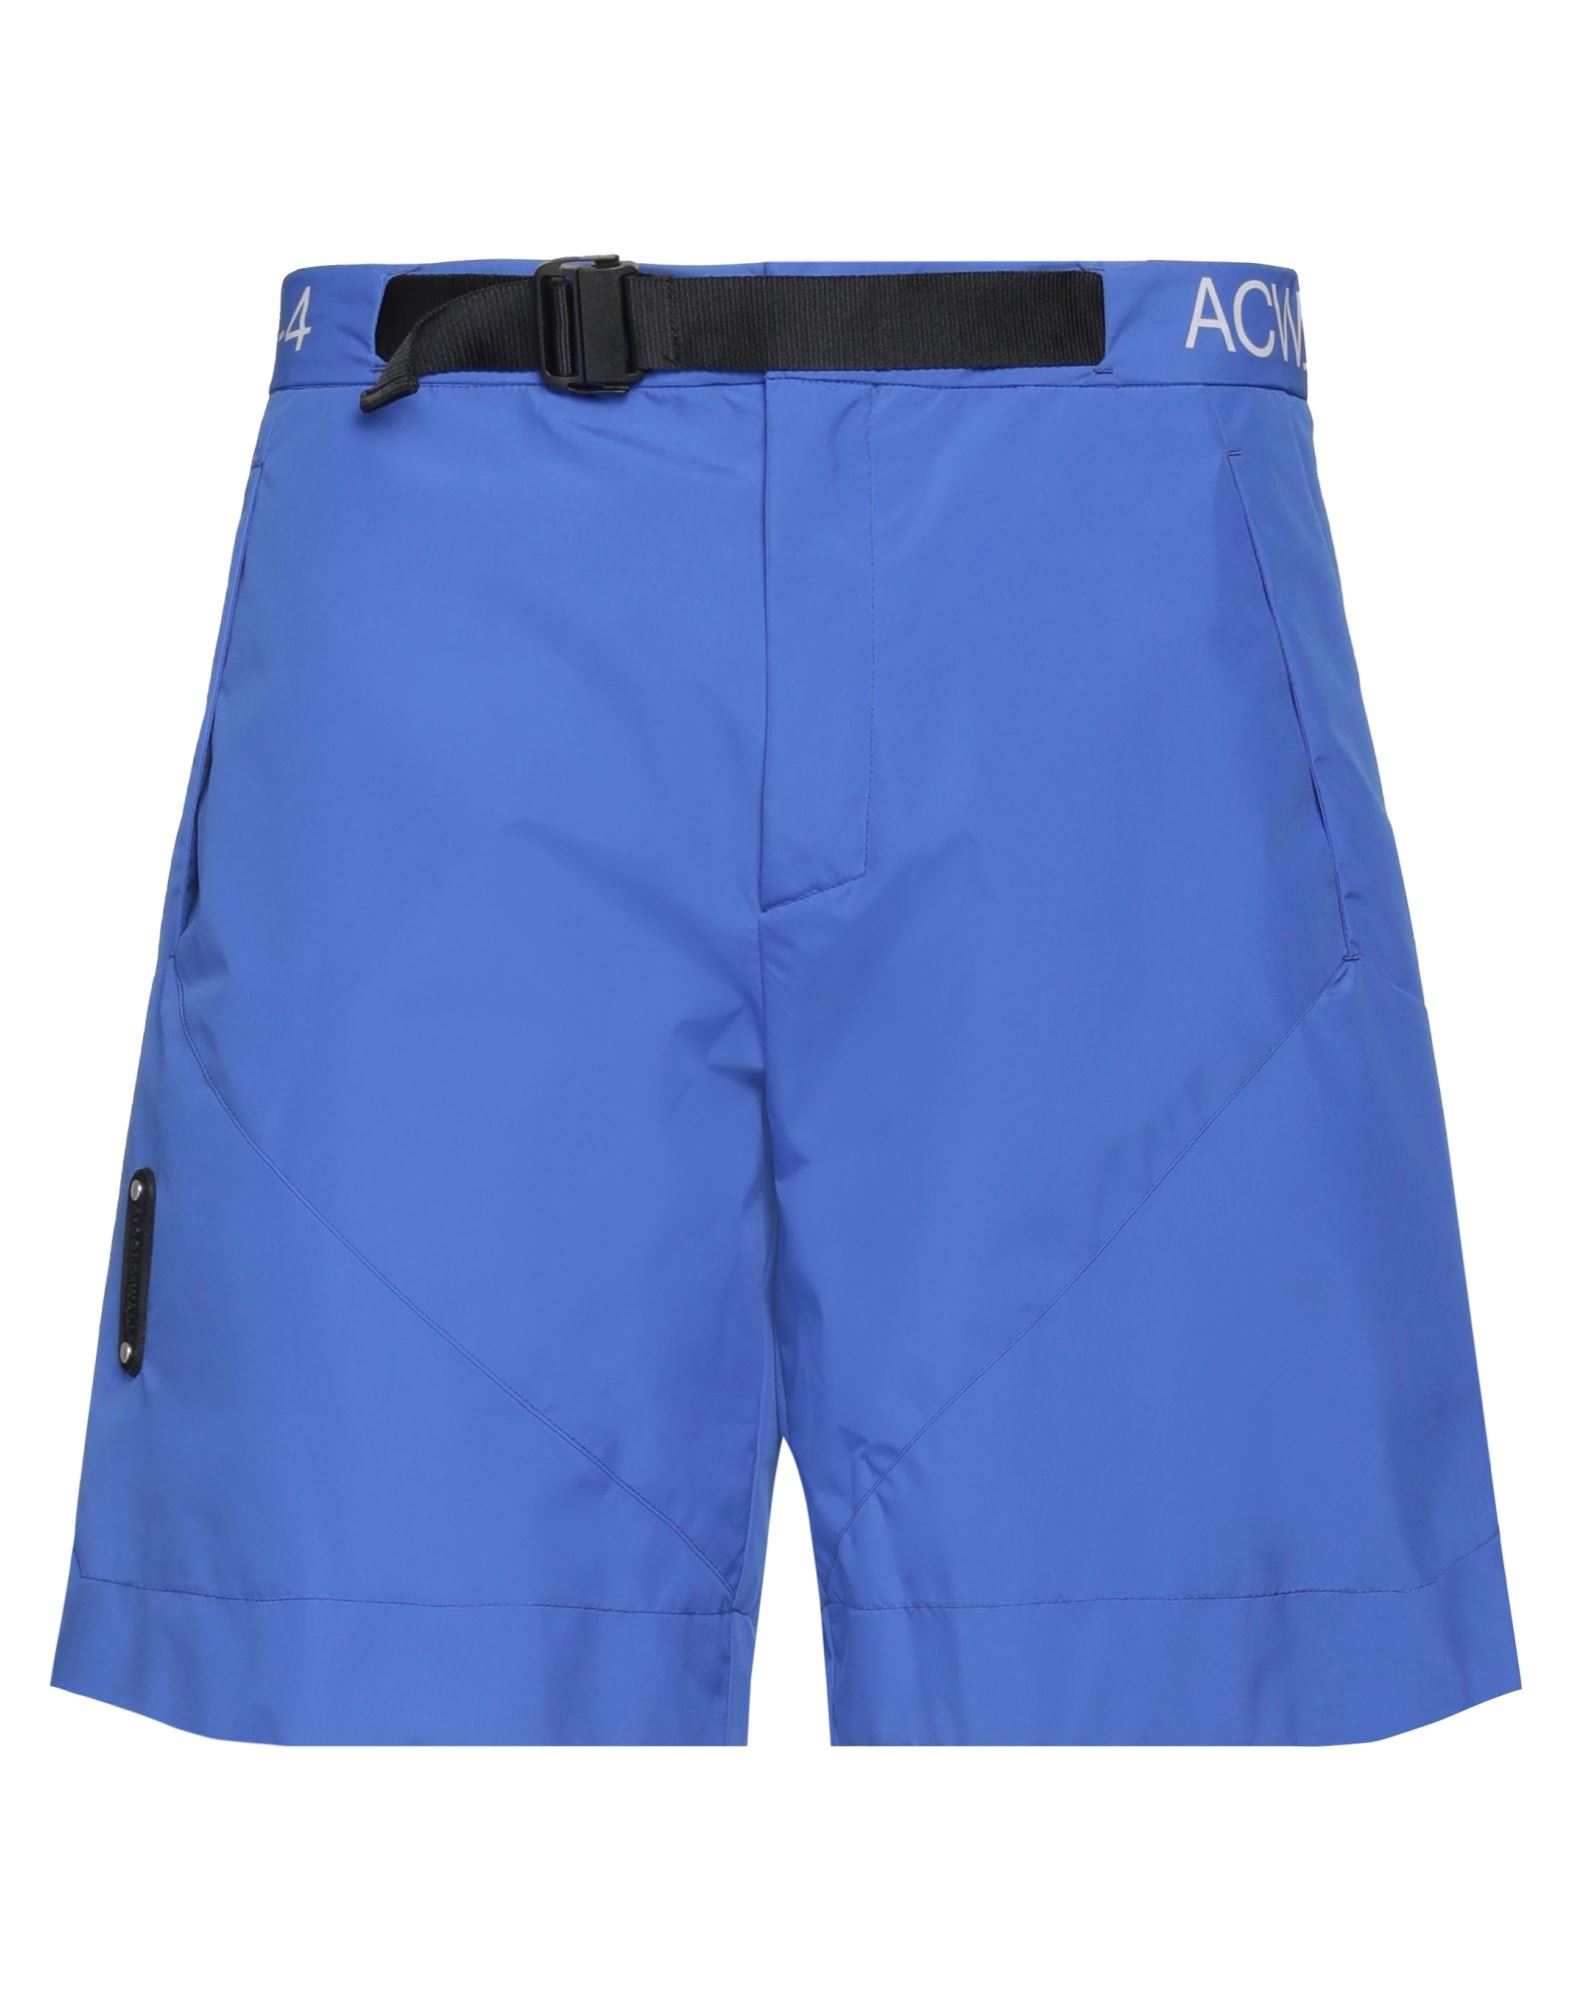 A-COLD-WALL* Shorts & Bermudashorts Herren Königsblau von A-COLD-WALL*